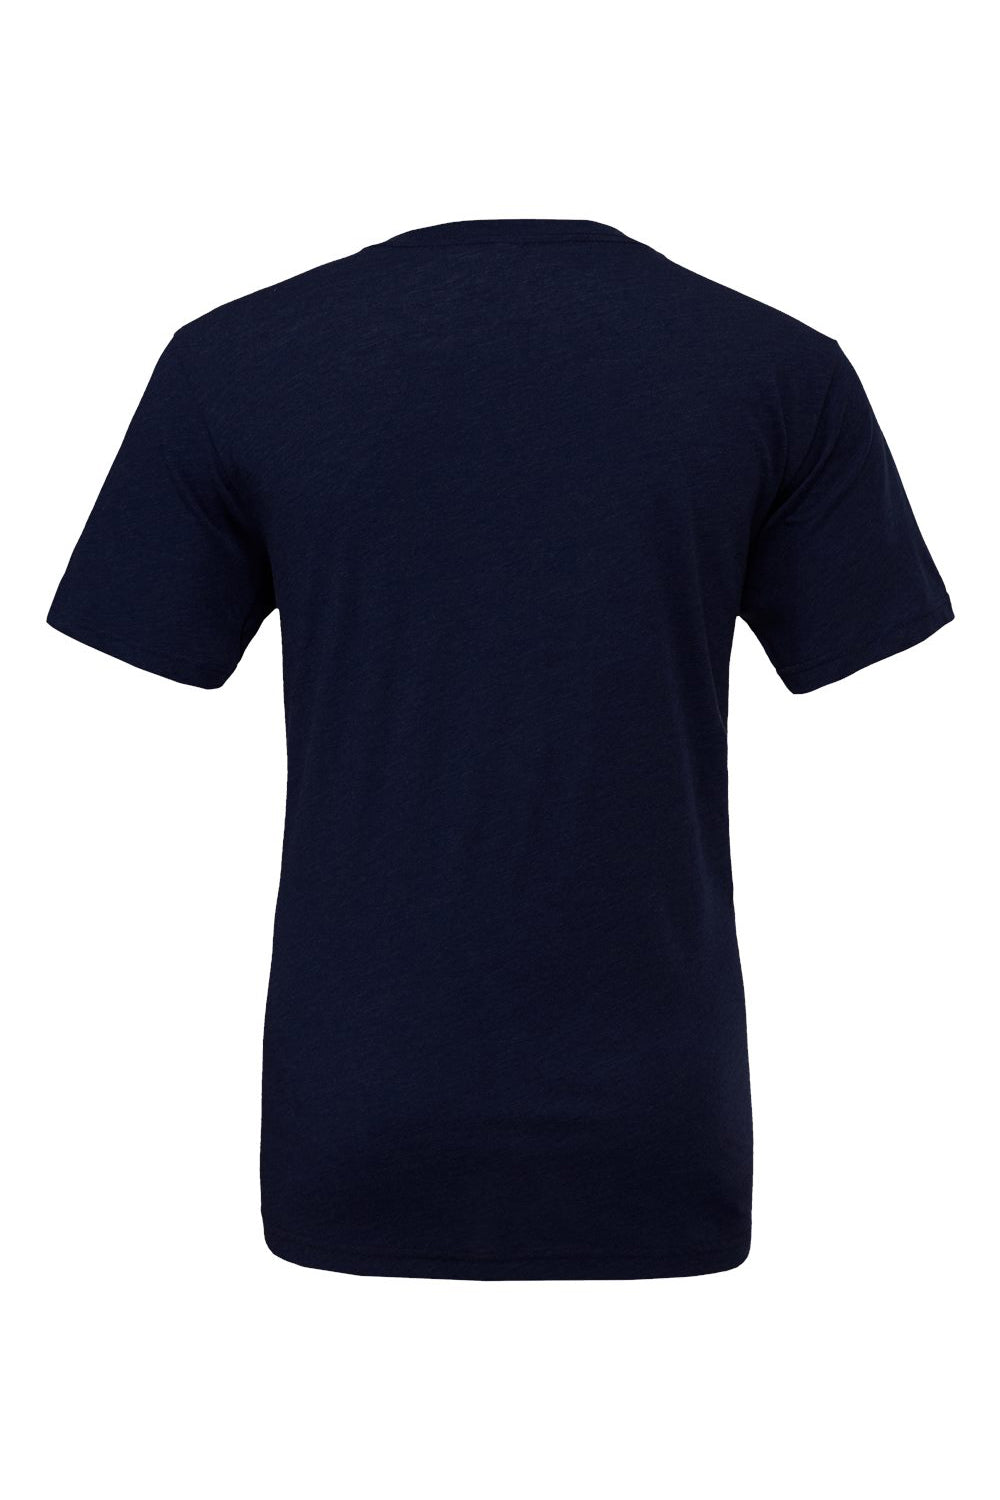 Bella + Canvas BC3413/3413C/3413 Mens Short Sleeve Crewneck T-Shirt Solid Navy Blue Flat Back